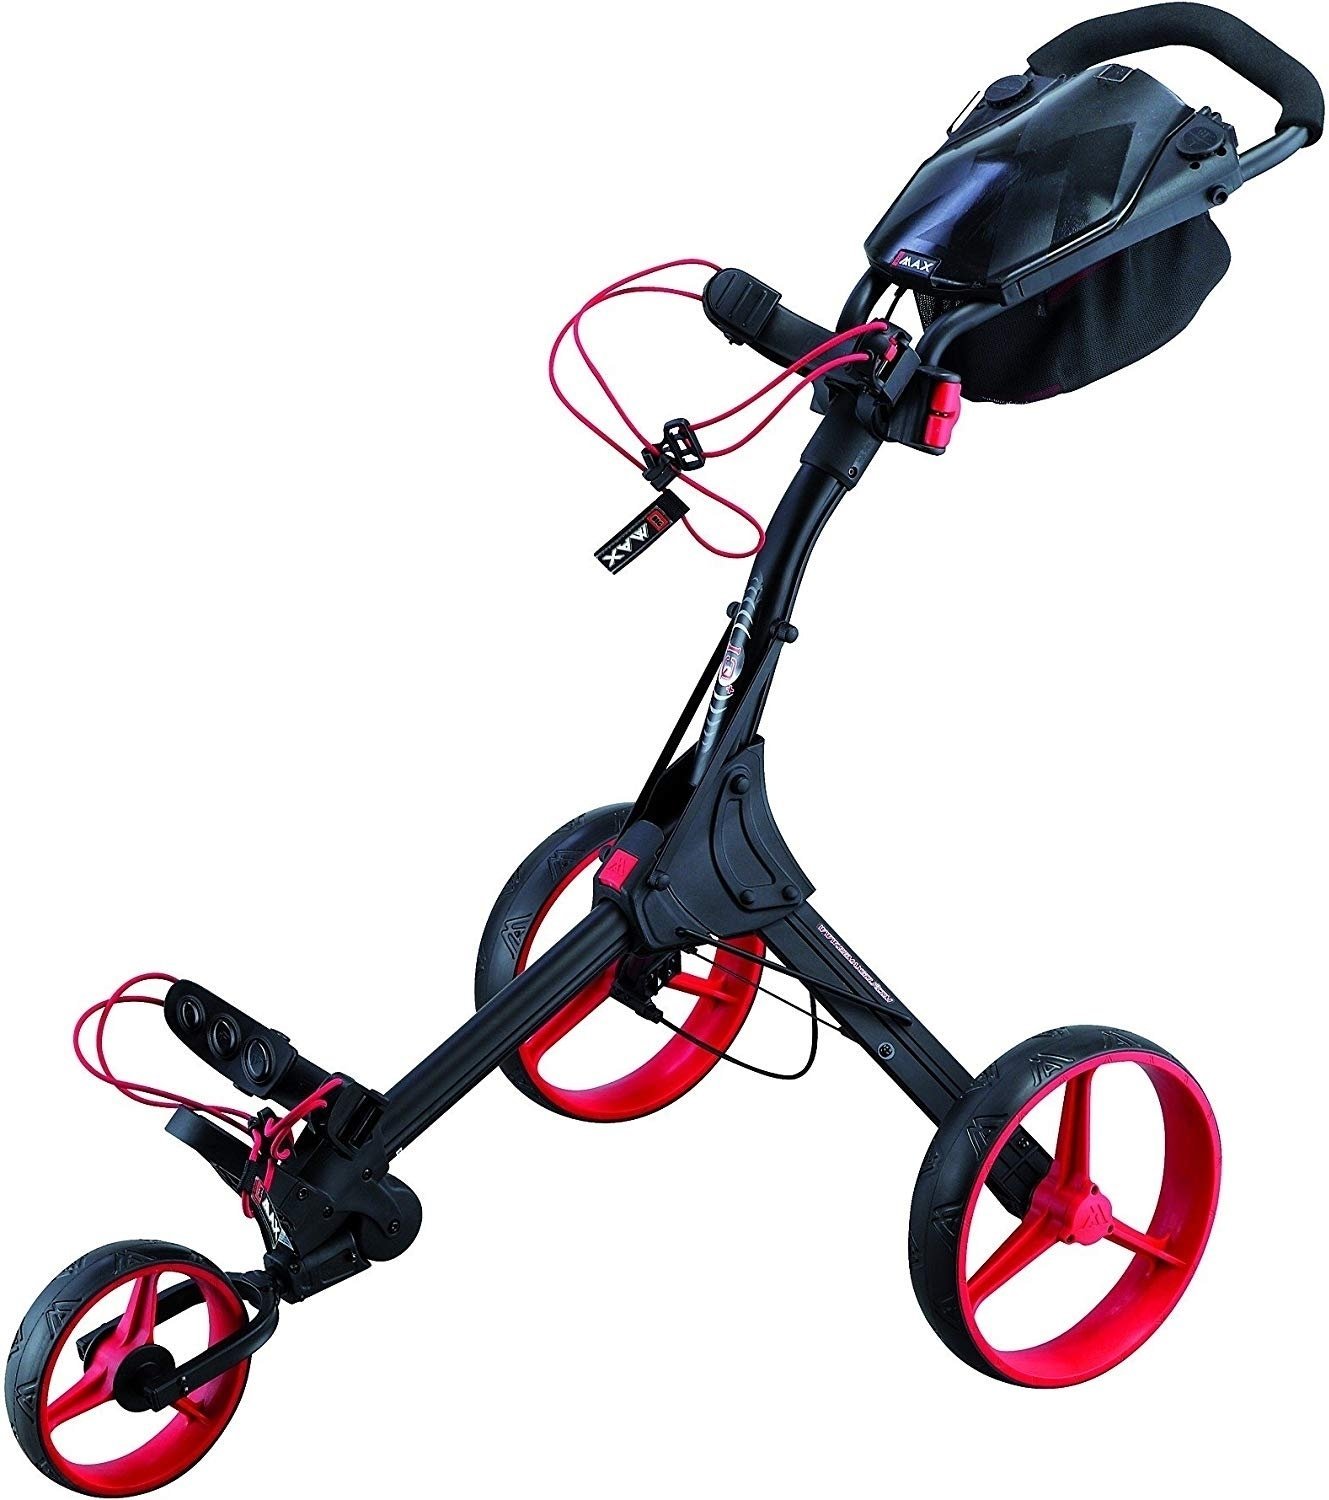 Manuální golfové vozíky Big Max IQ+ Black/Red/Black Manuální golfové vozíky